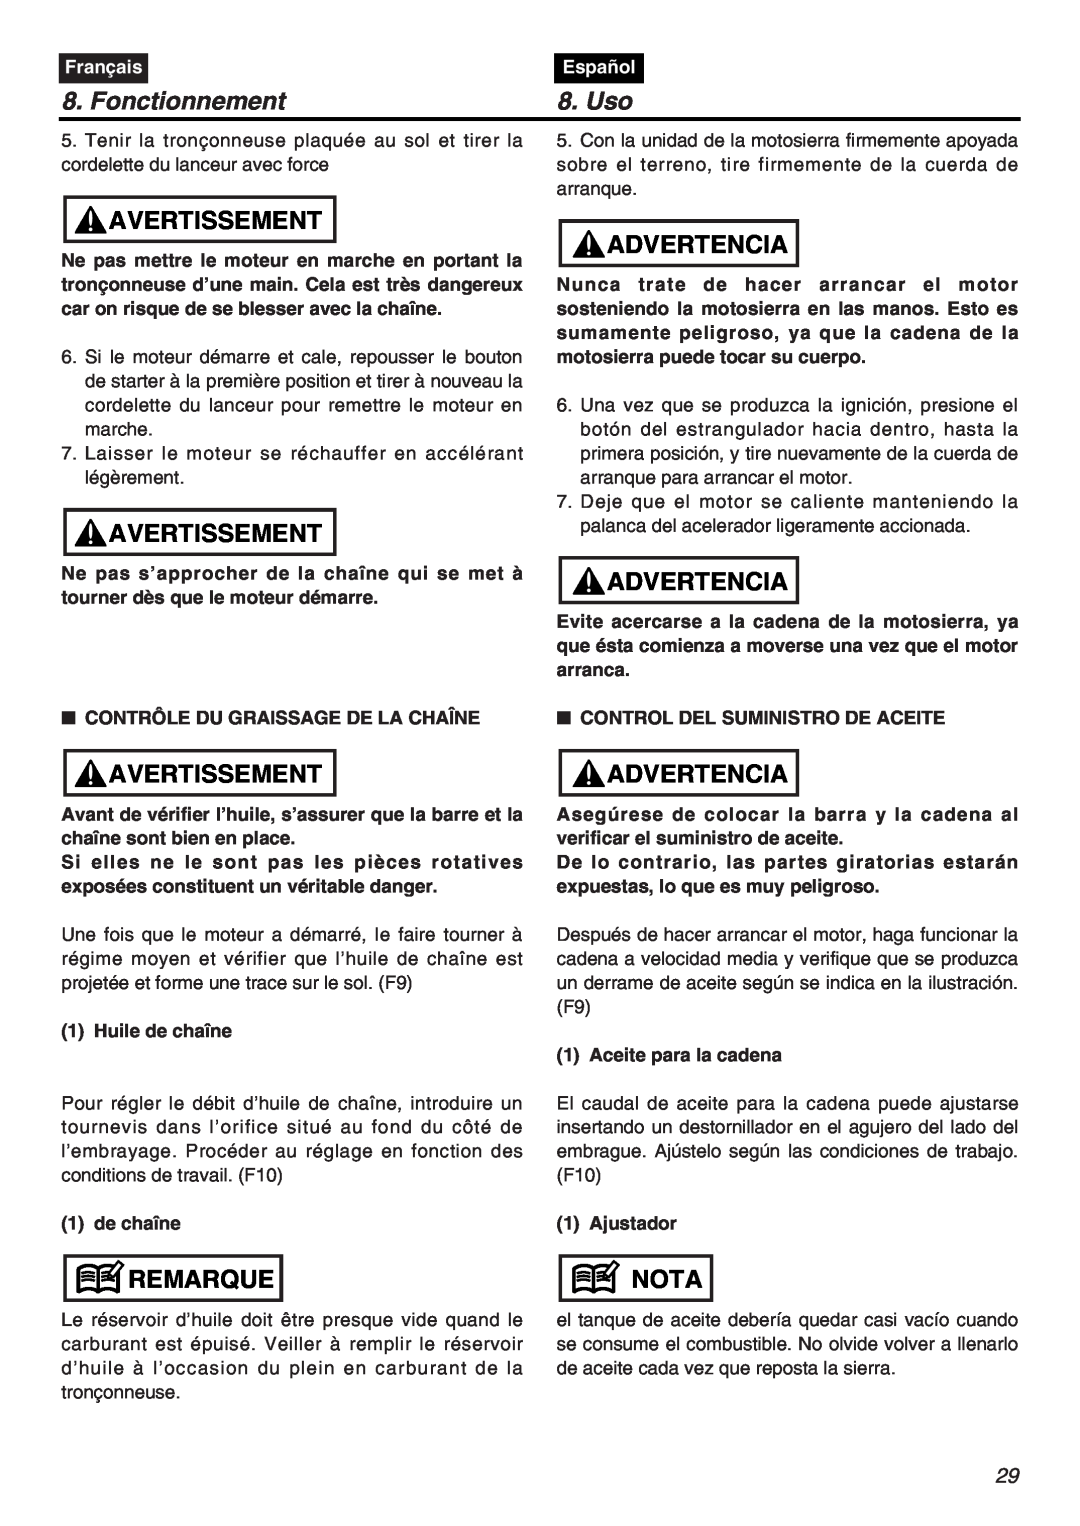 RedMax G5000AVS manual Fonctionnement, Uso, Avertissement, Advertencia, Remarque, Nota, Français, Español 